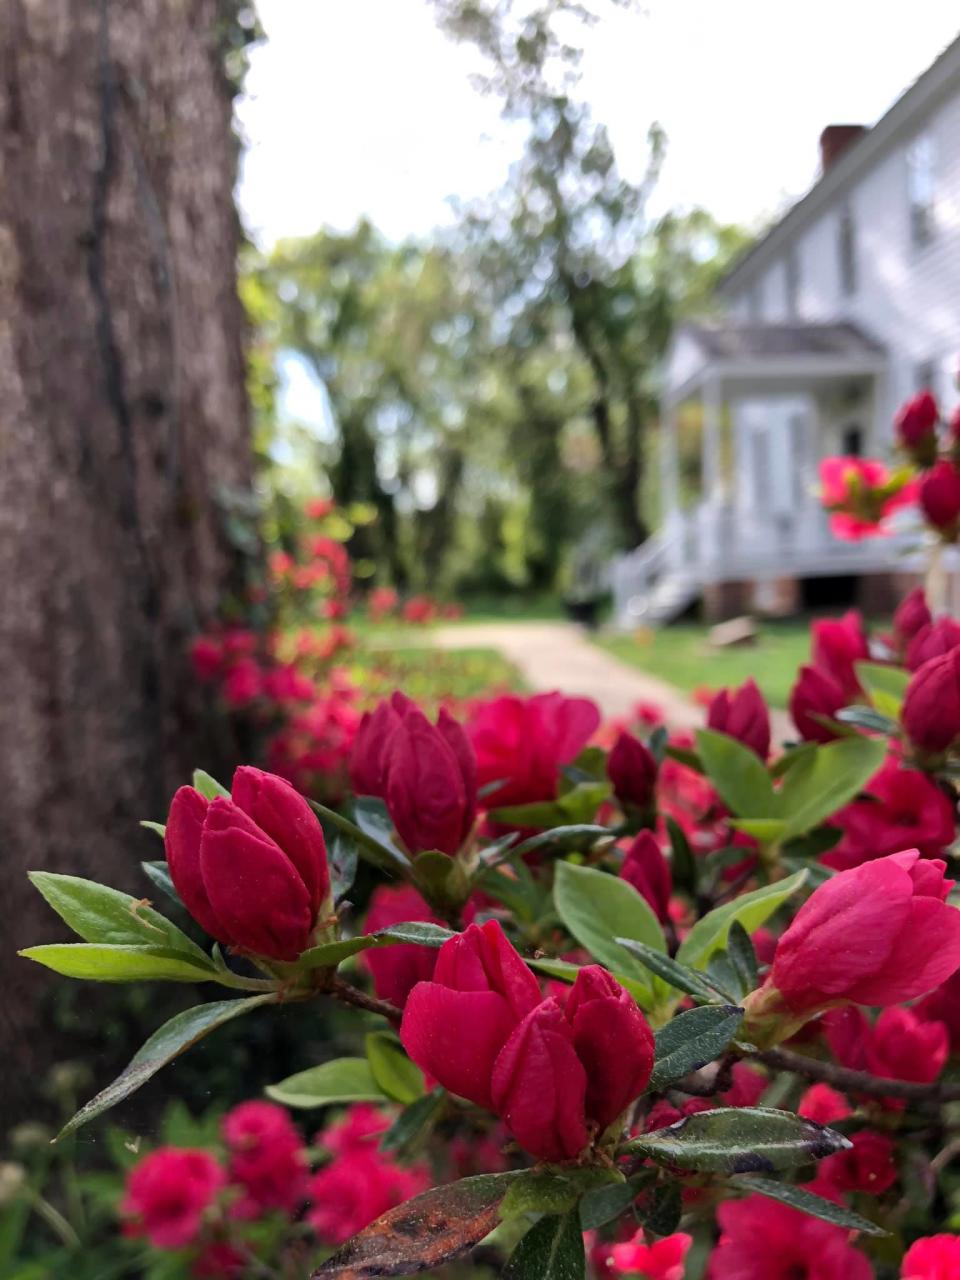 Blooming azalea at the Weston Manor in Hopewell, Va. on April 13, 2021.